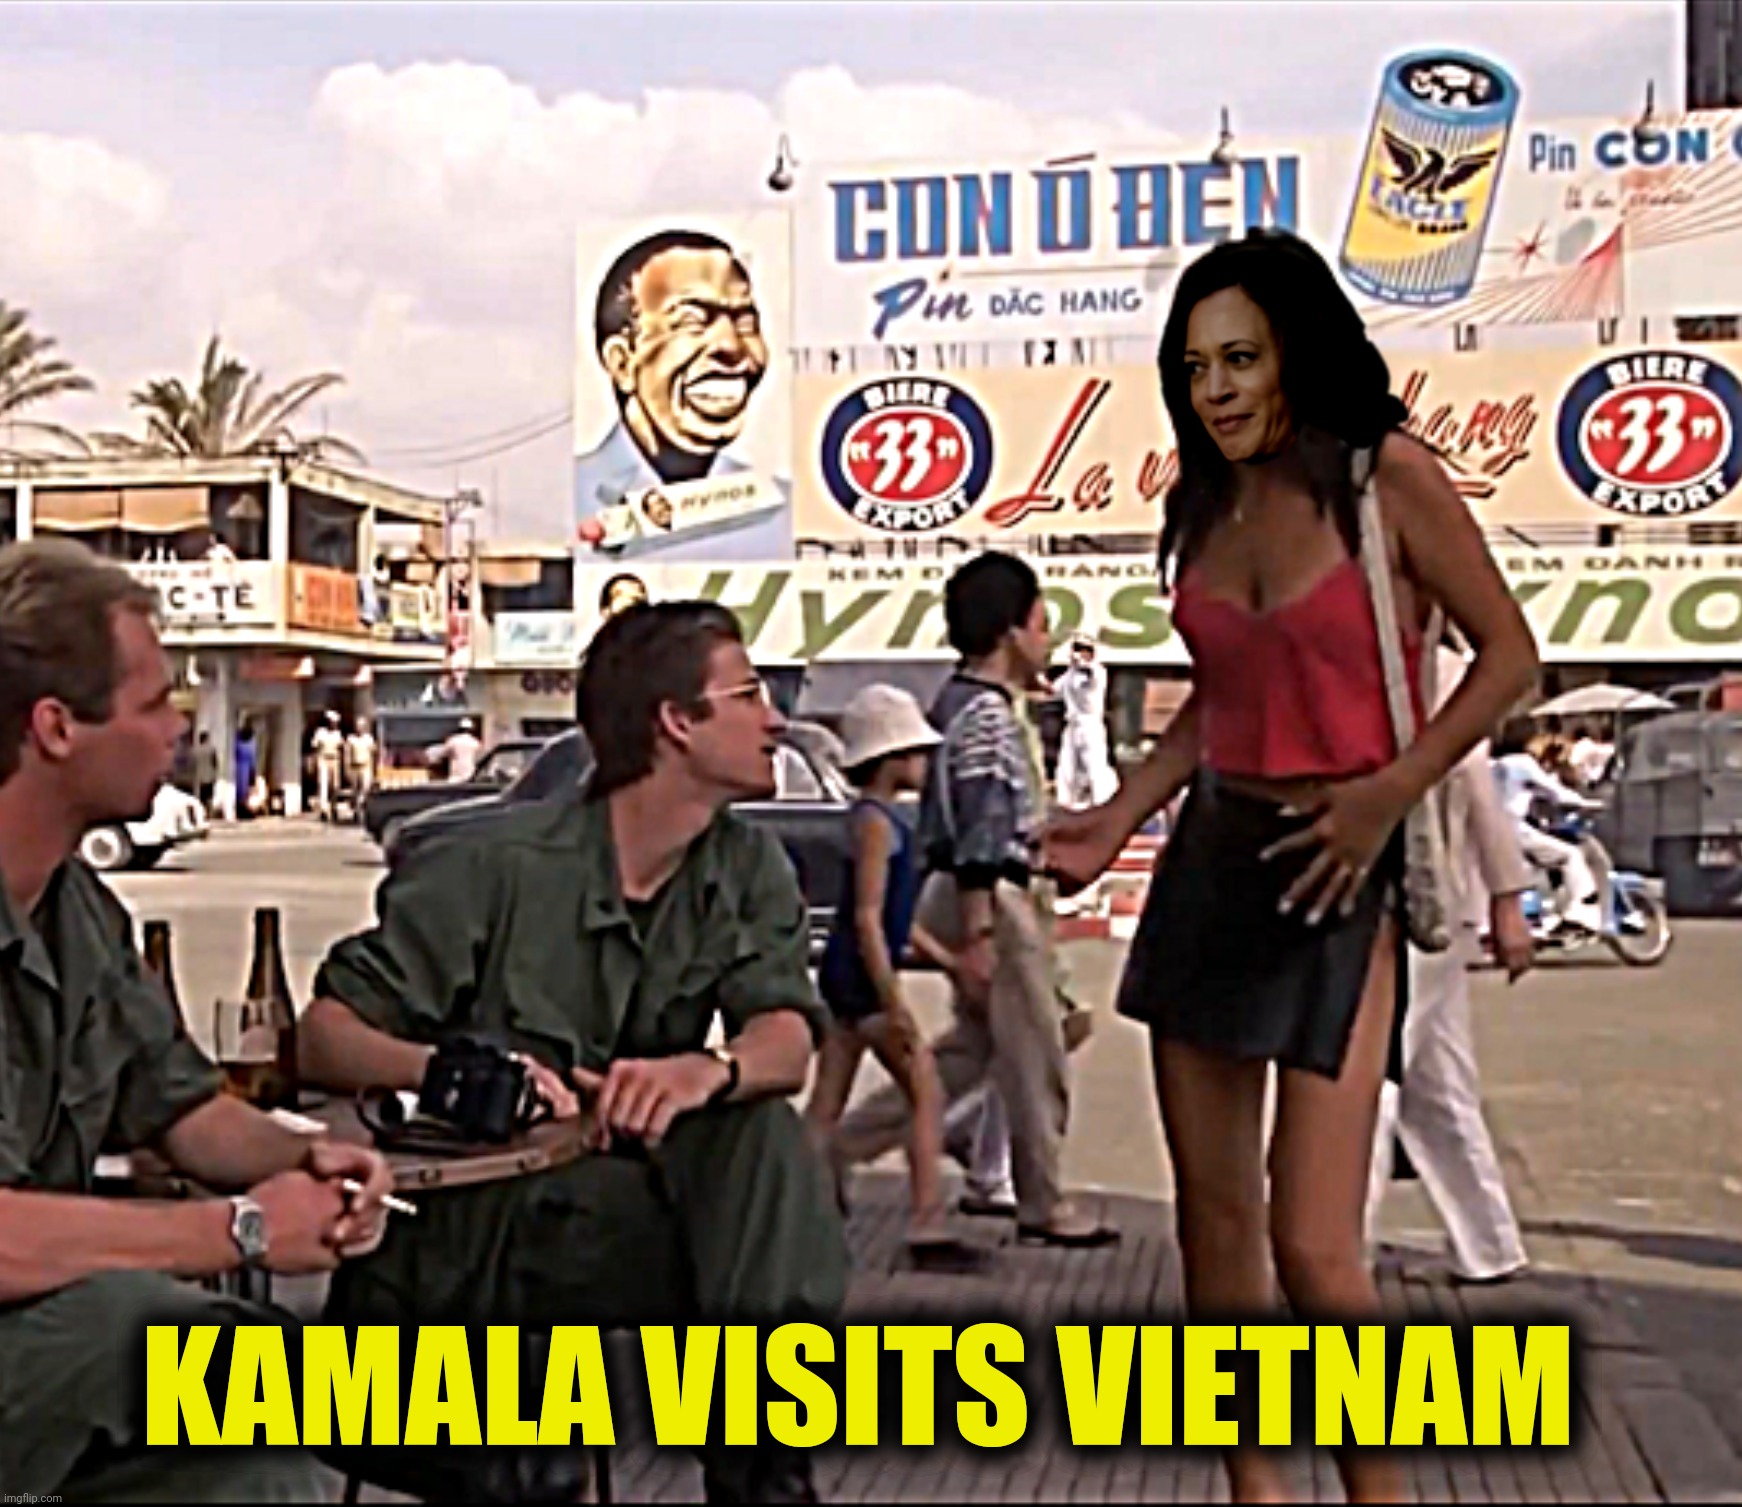 The fall of Saigon (Full Mental Jacket) | KAMALA VISITS VIETNAM | image tagged in bad photoshop,kamala harris,full metal jacket,fall of saigon | made w/ Imgflip meme maker